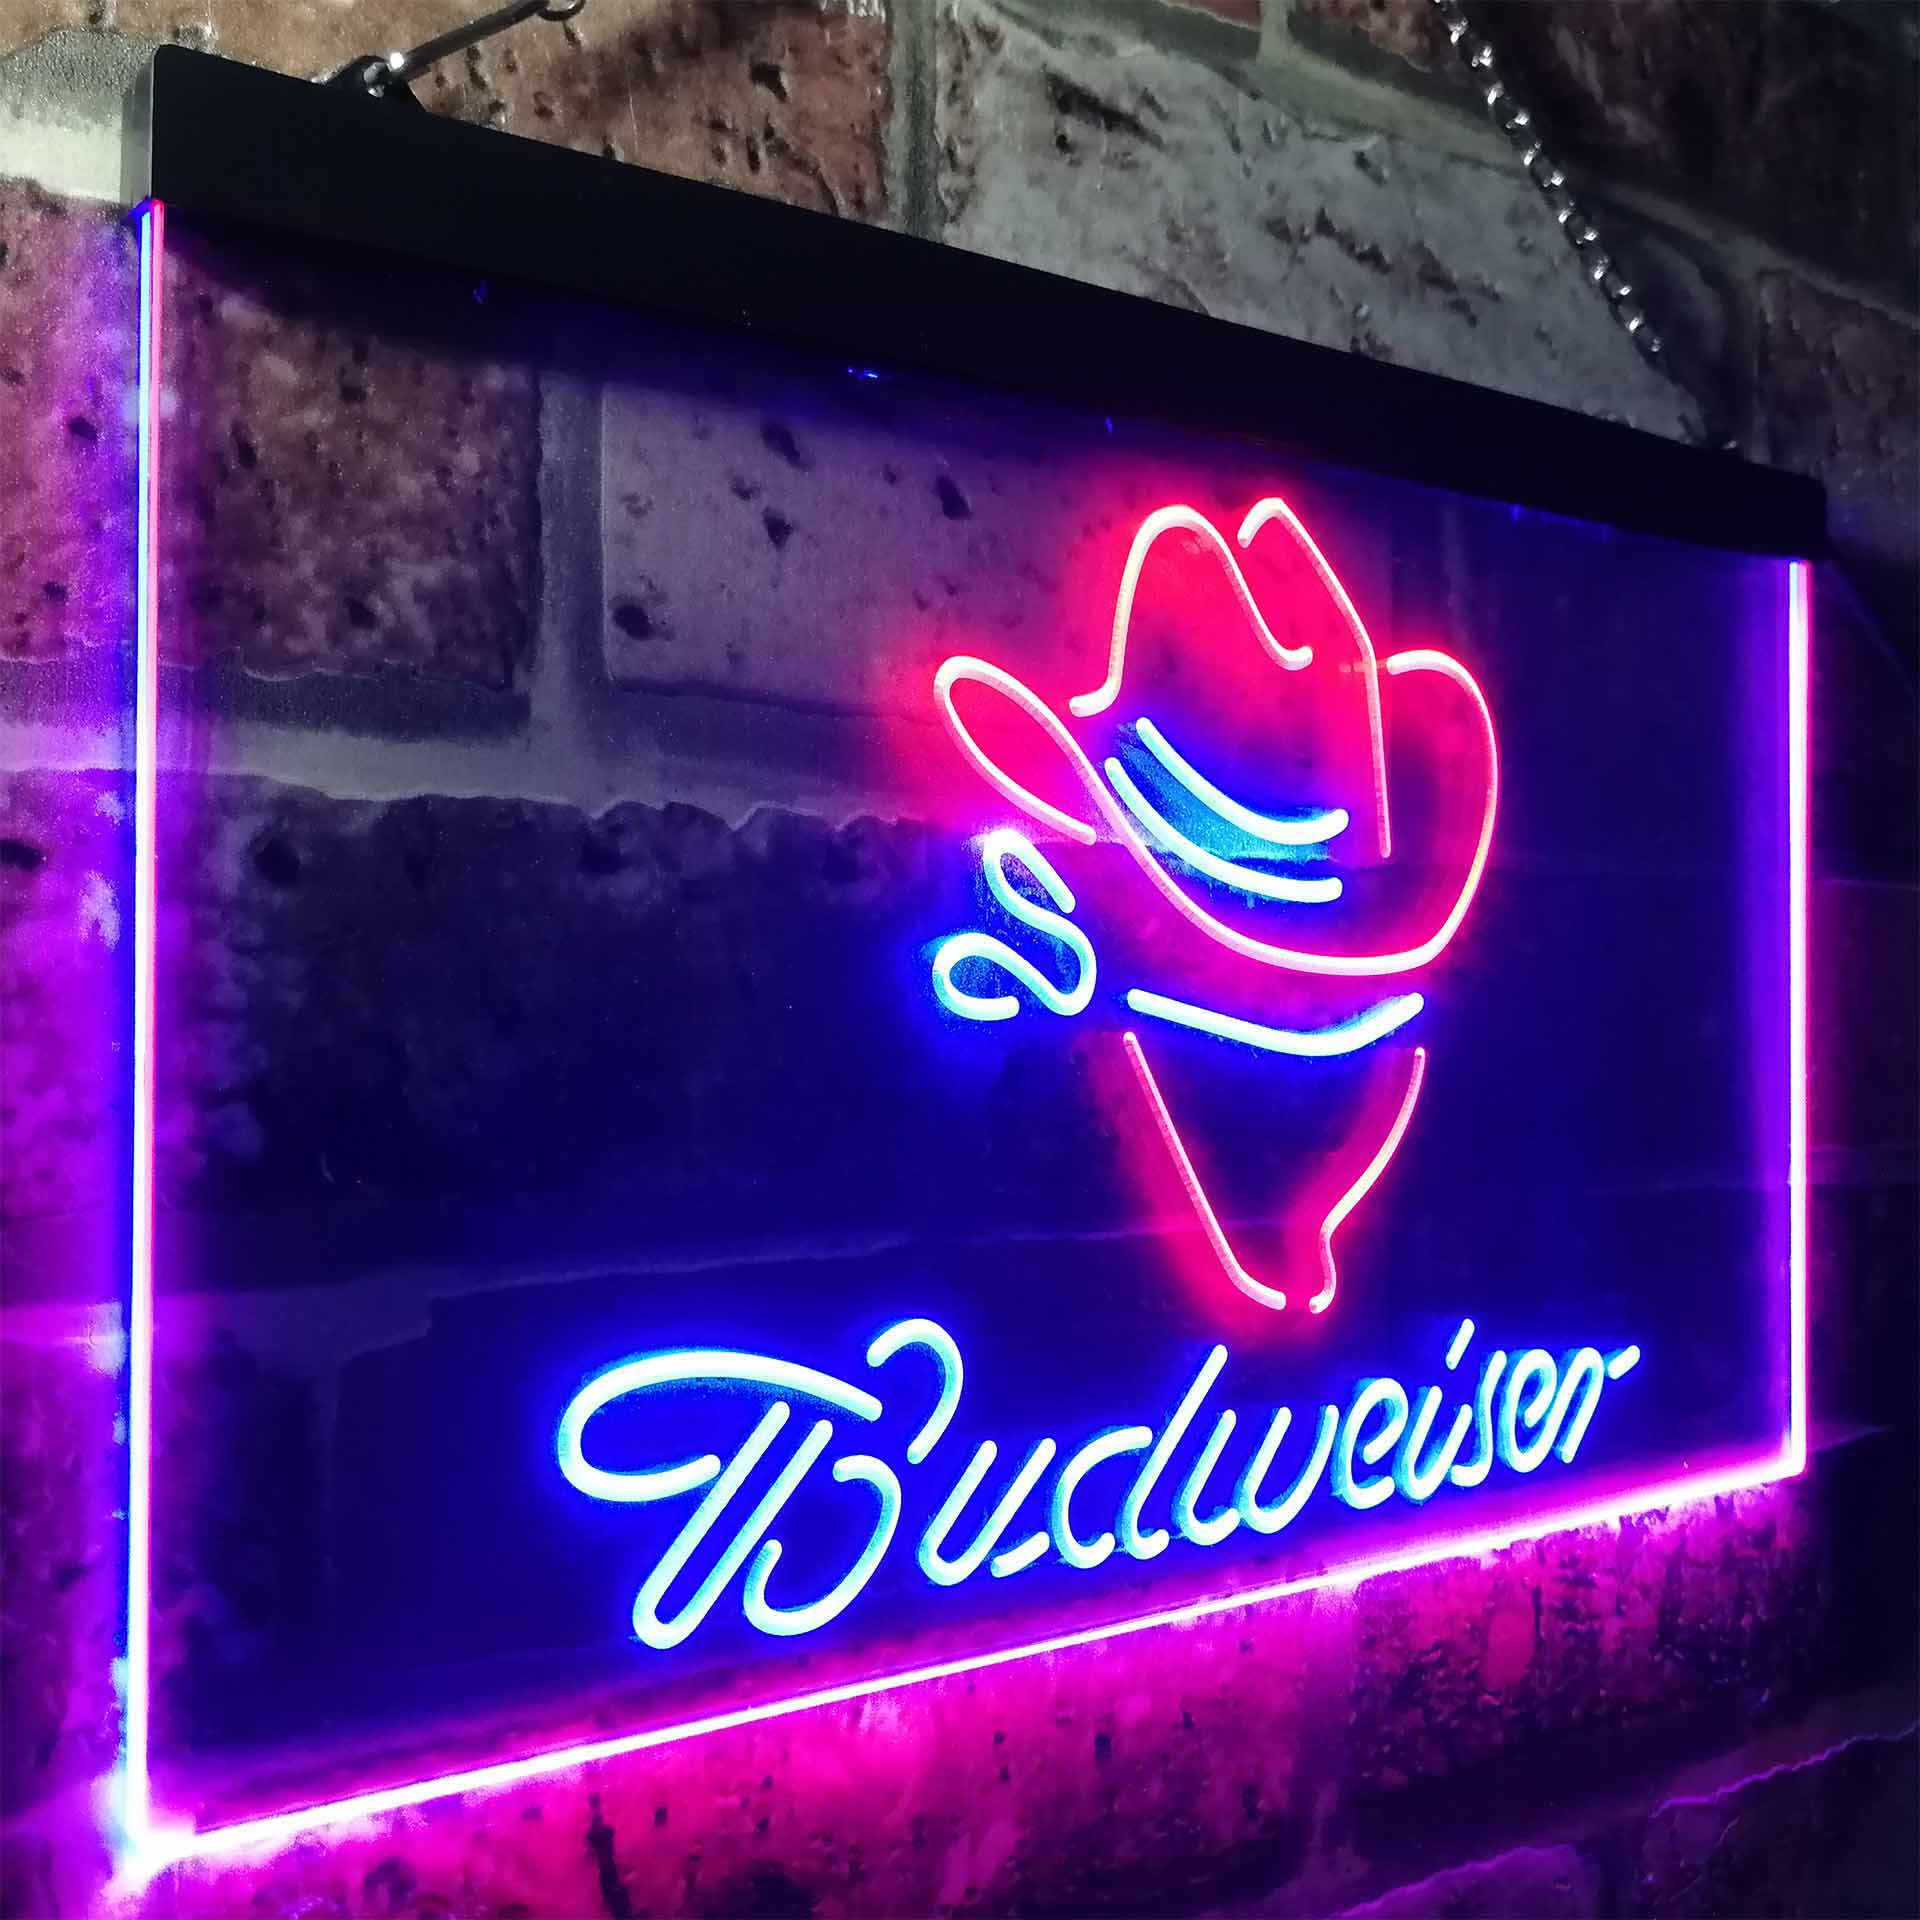 Budweiser Cowboy Neon LED Sign